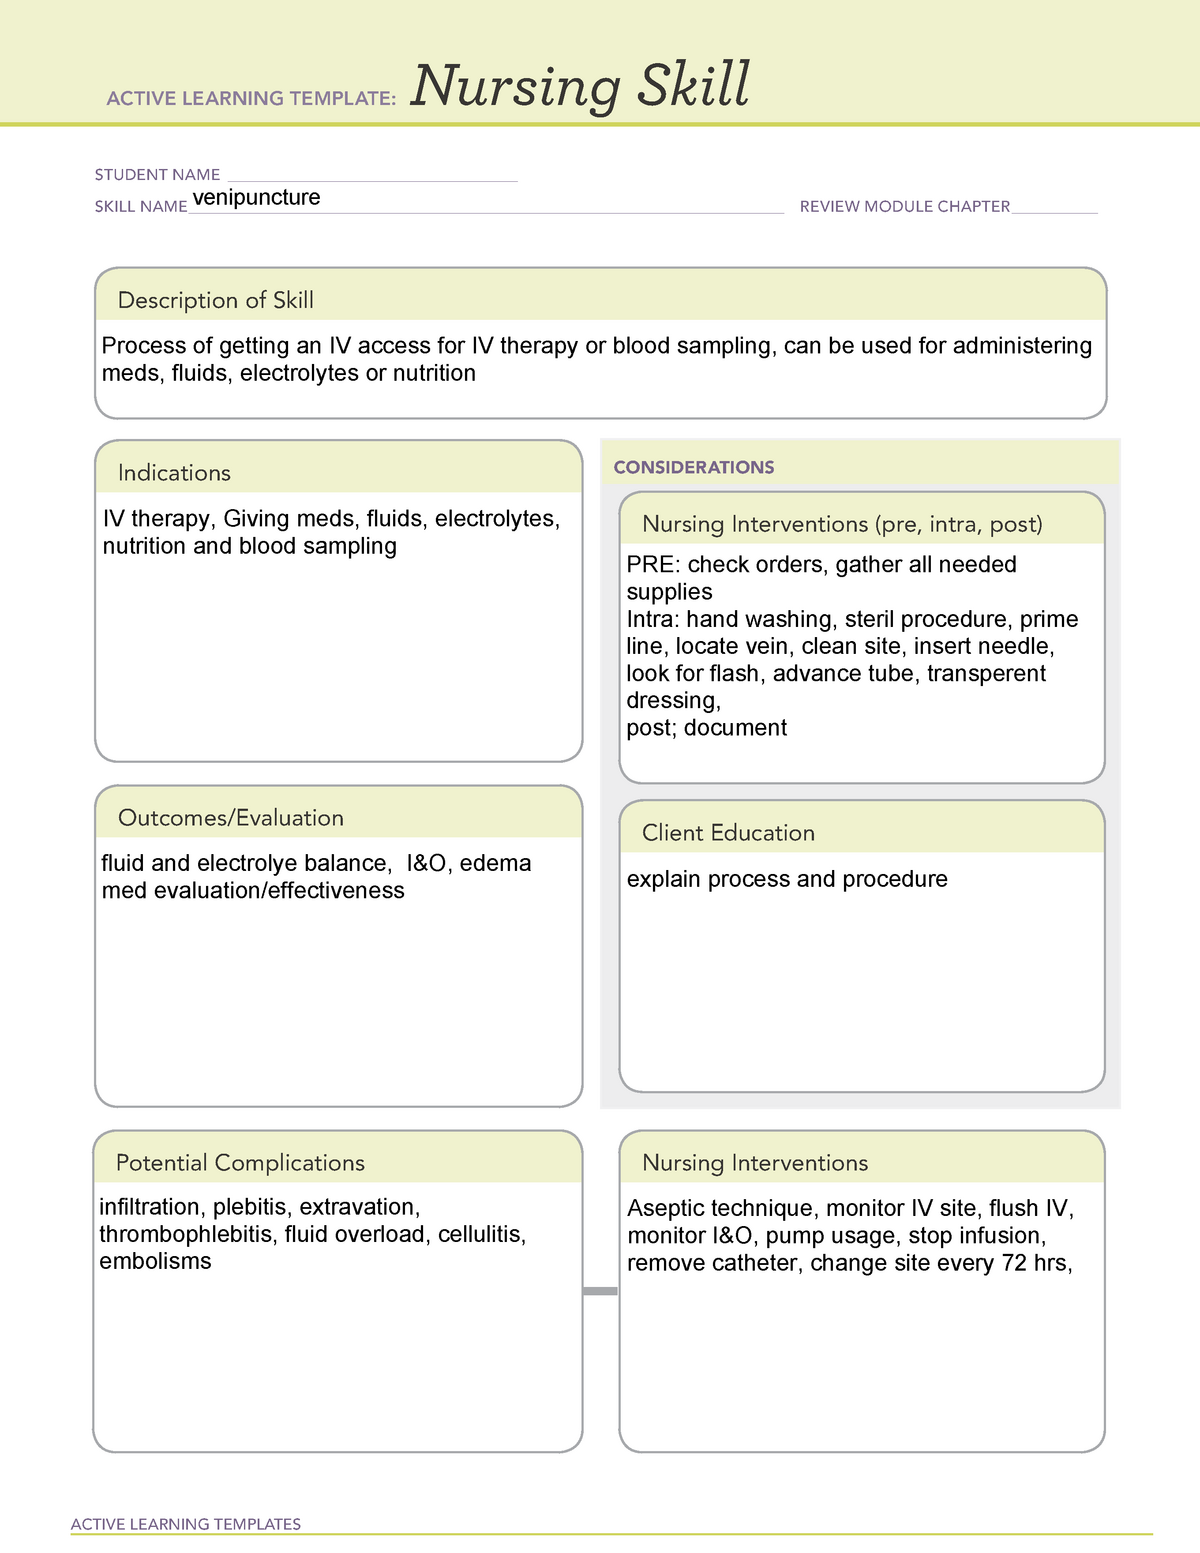 Nursing skill template (12) HSRT 2342 StuDocu